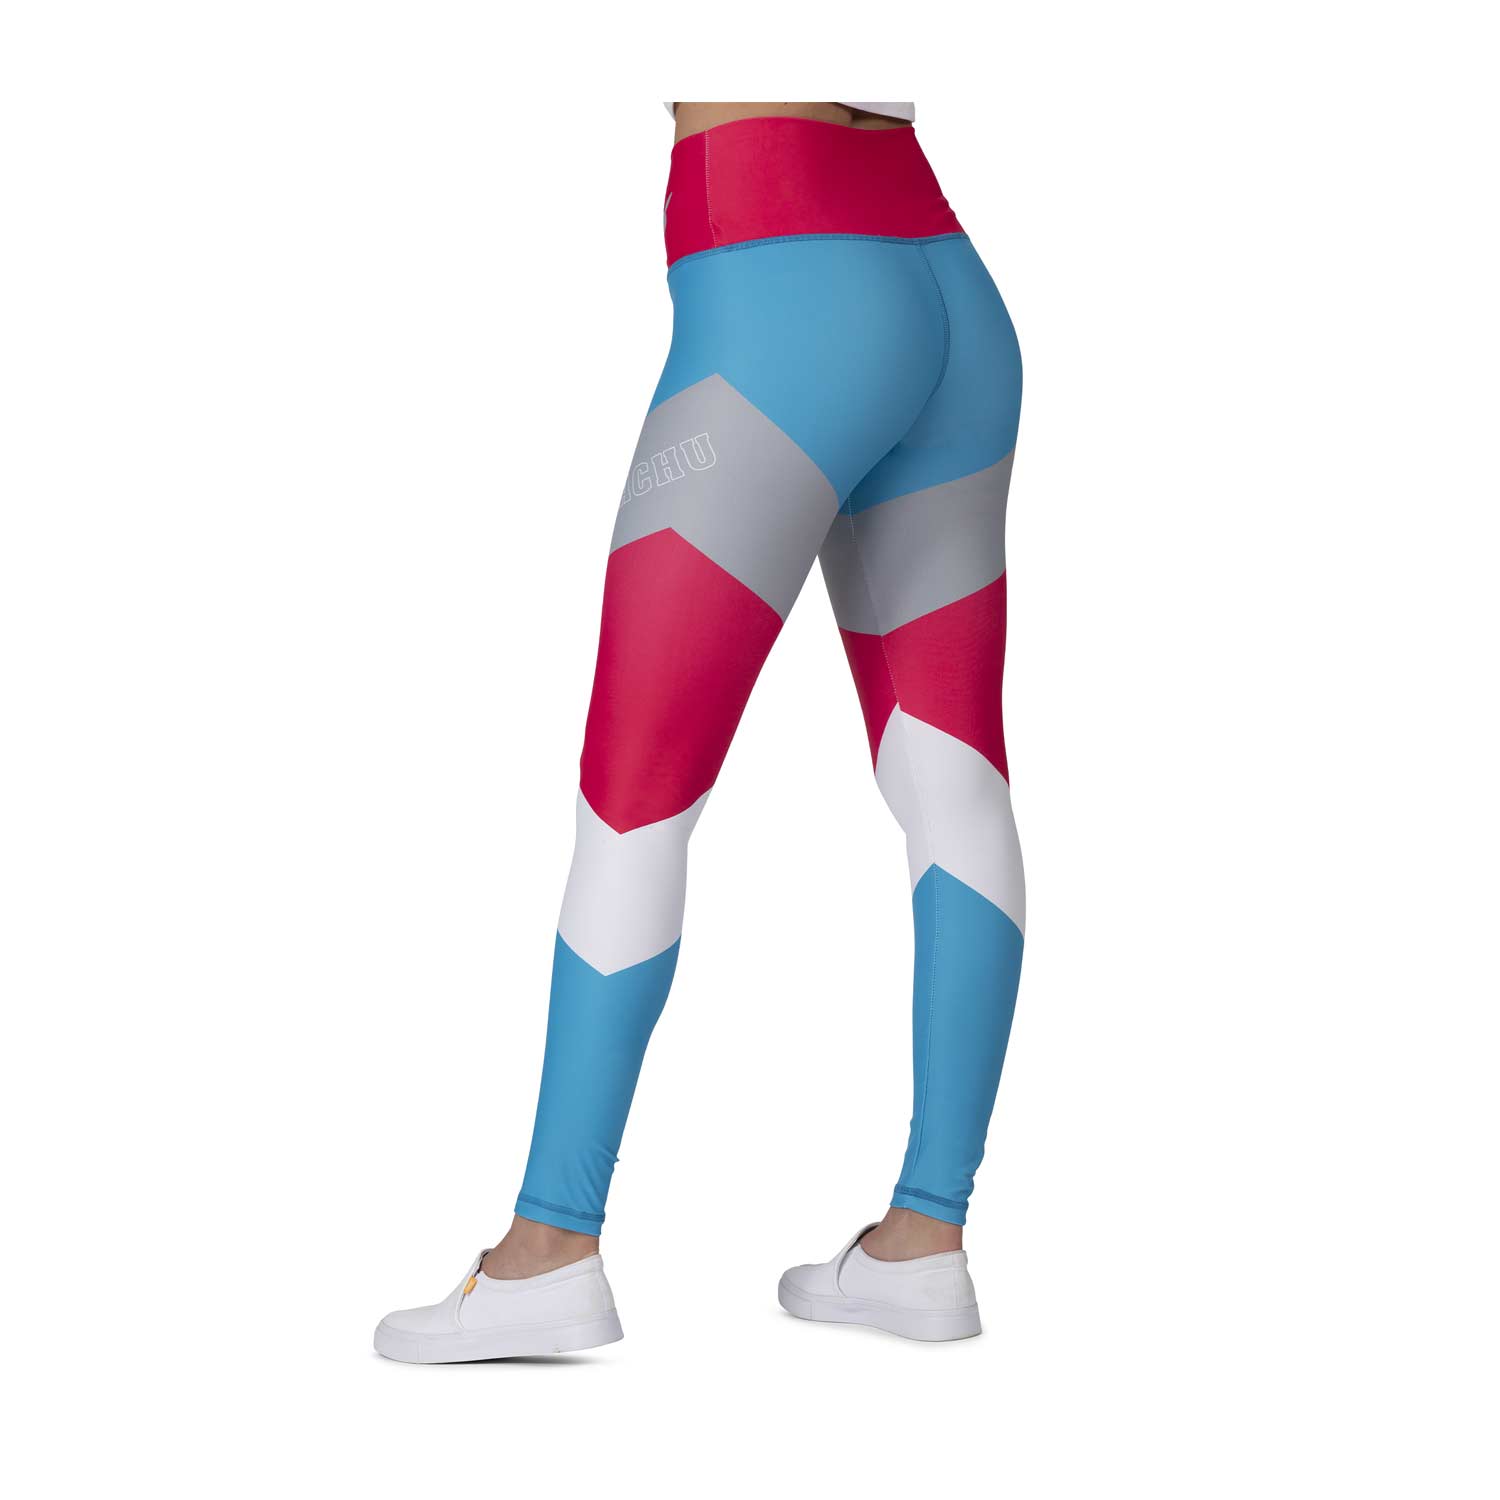 Women's Fitness Pokemon Characters Printed Fitted Yoga Pant Leggings US Seller 